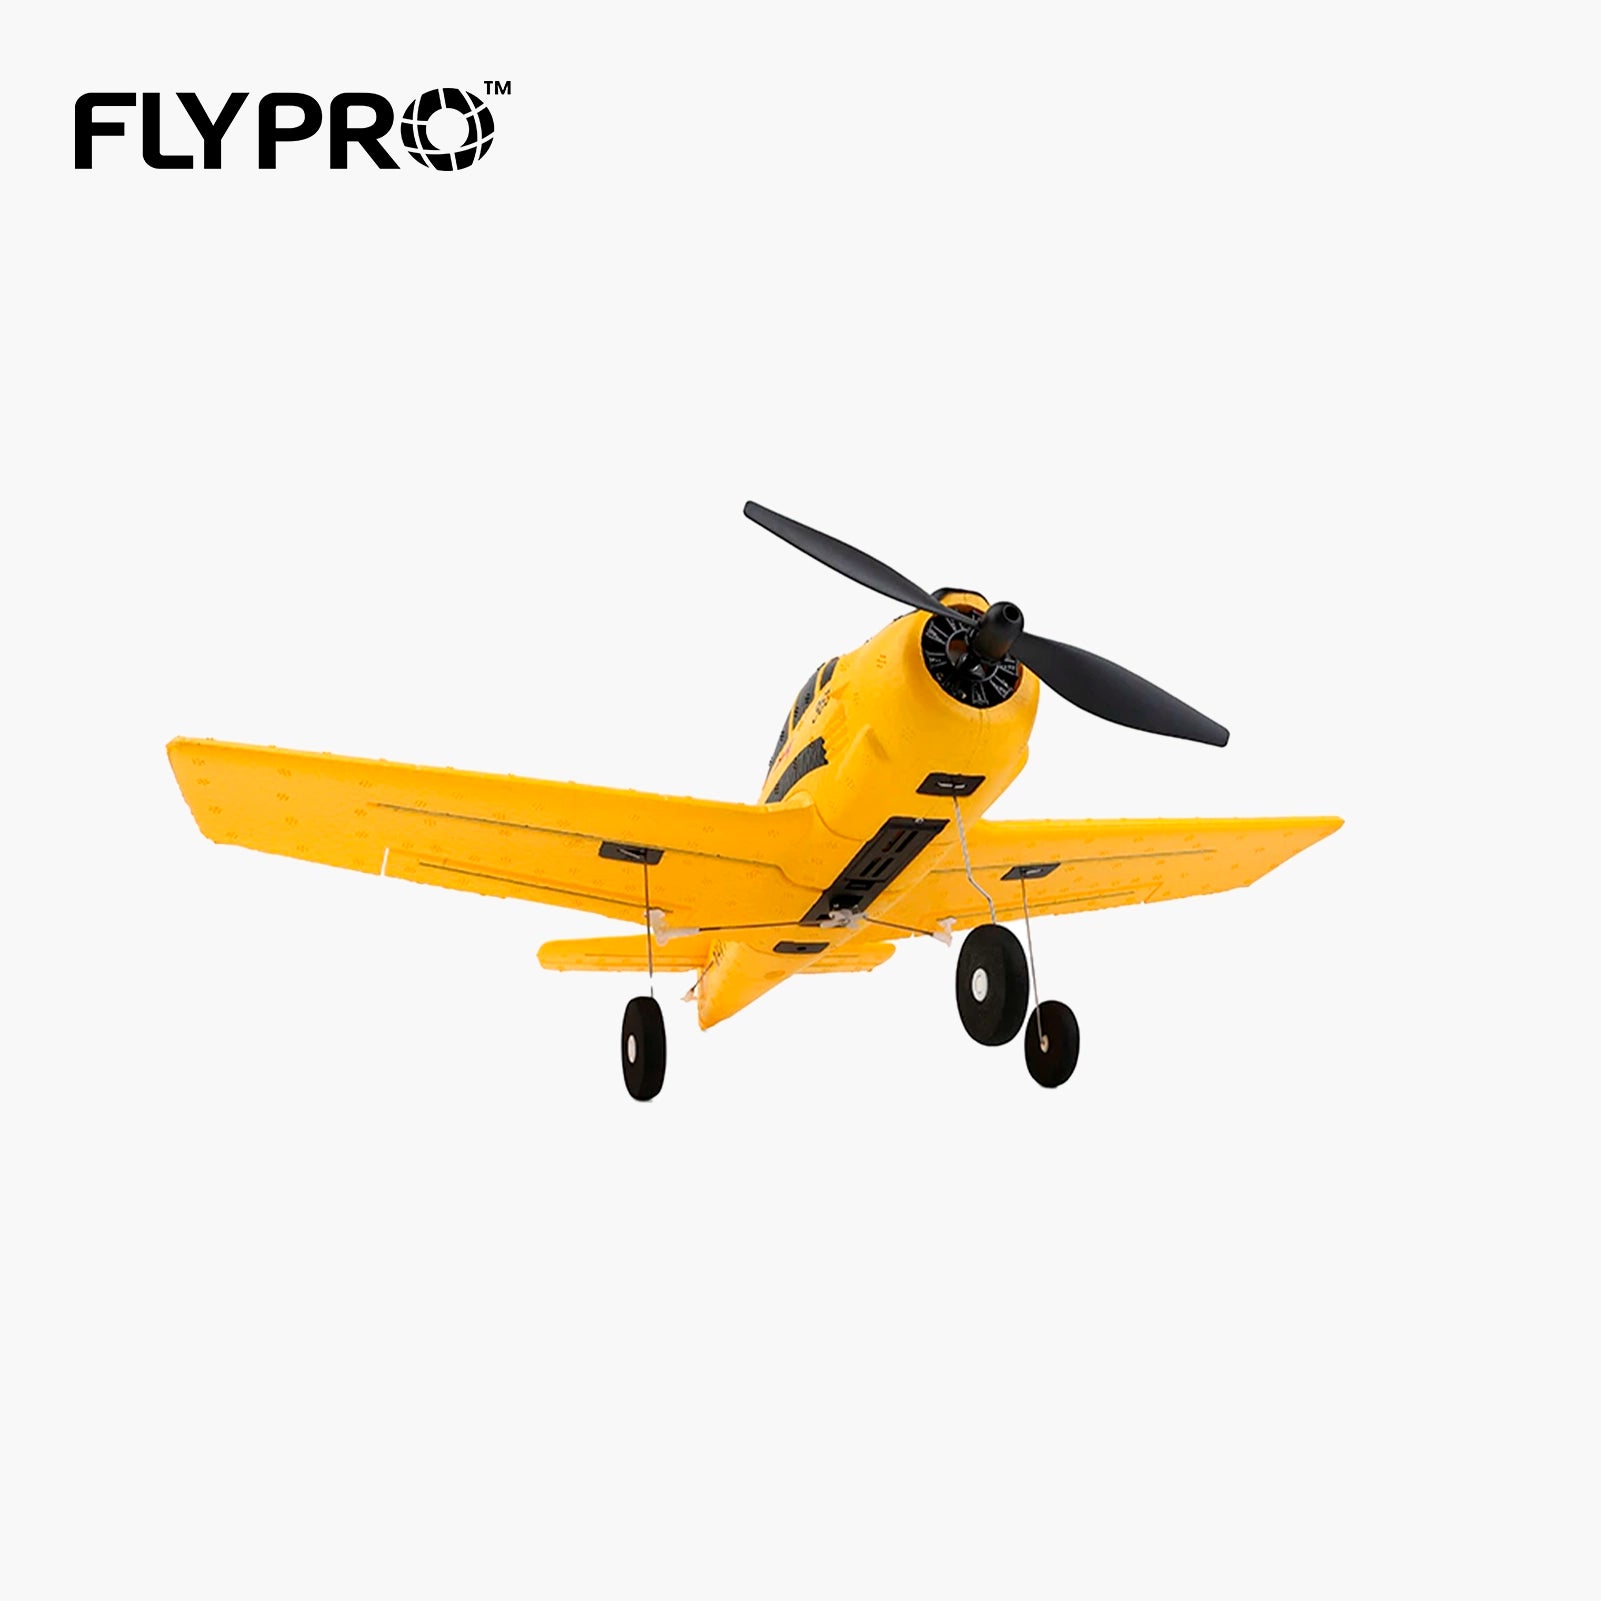 FlyPro™ 